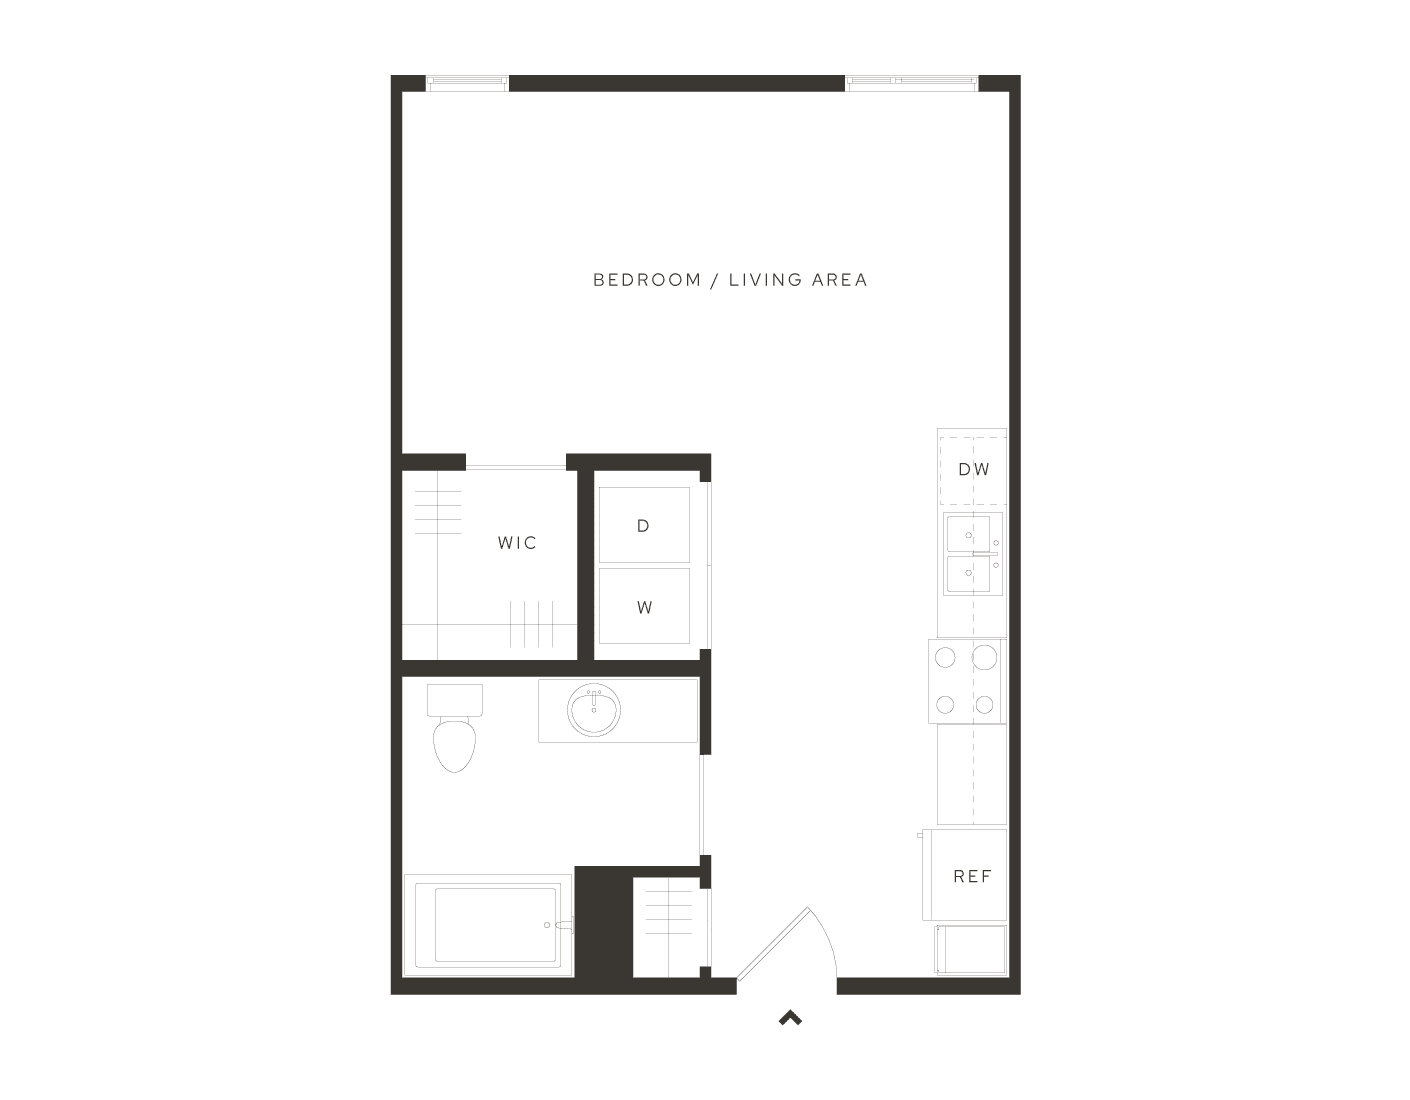 Signature studio floor plan at the Avia apartment building in Salt Lake City